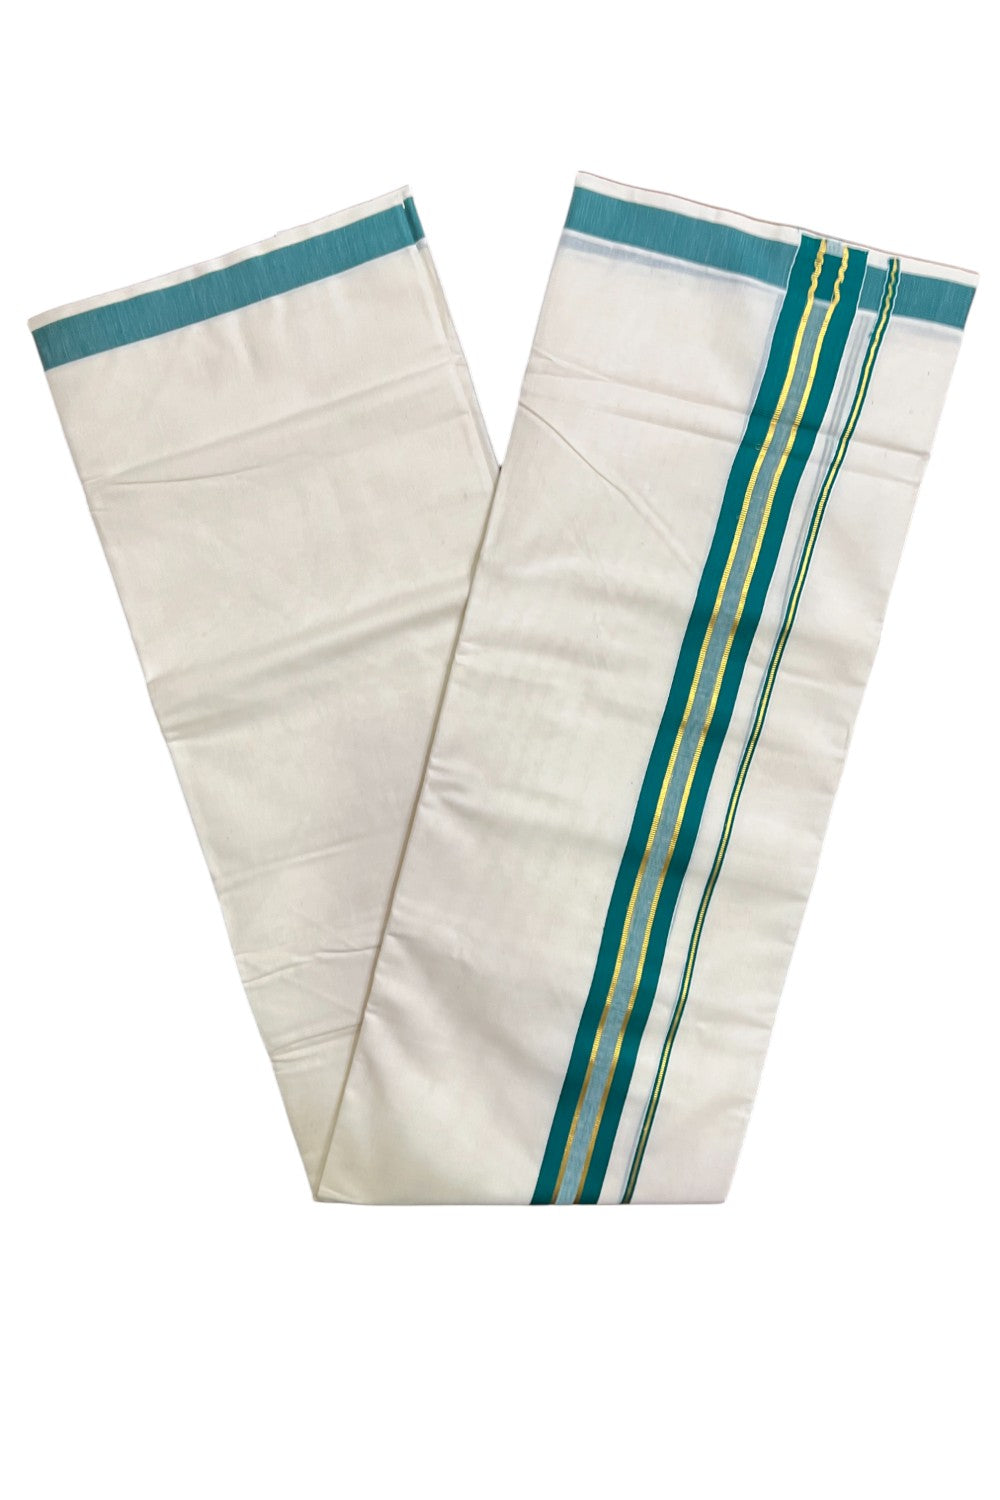 Kerala Pure Cotton Double Mundu with Kasavu And Green Border (South Indian Kerala Dhoti)